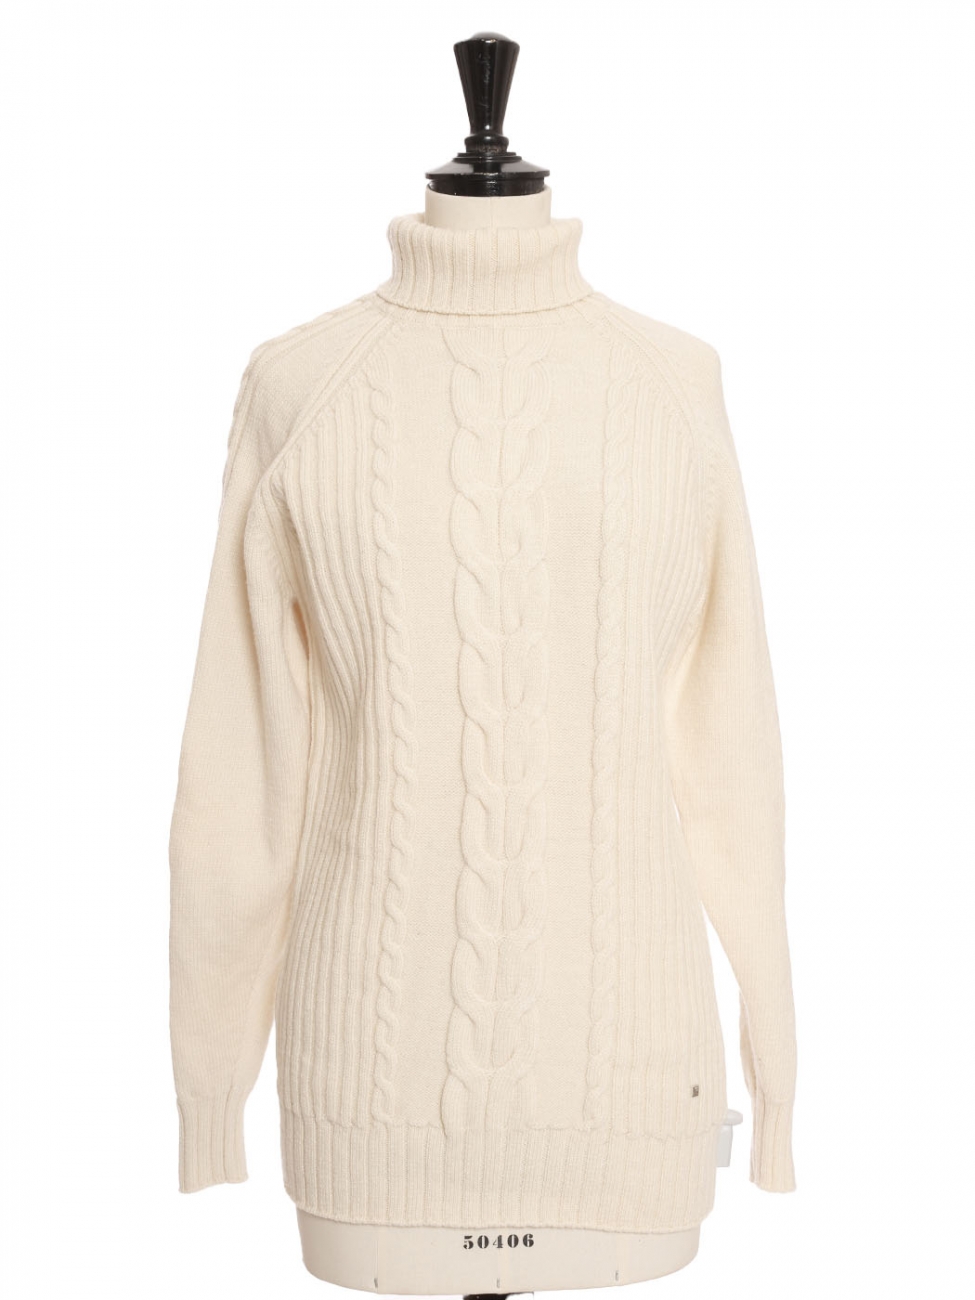 Boutique PIERRE CARDIN Wool turtleneck sweater in creamy white Size M